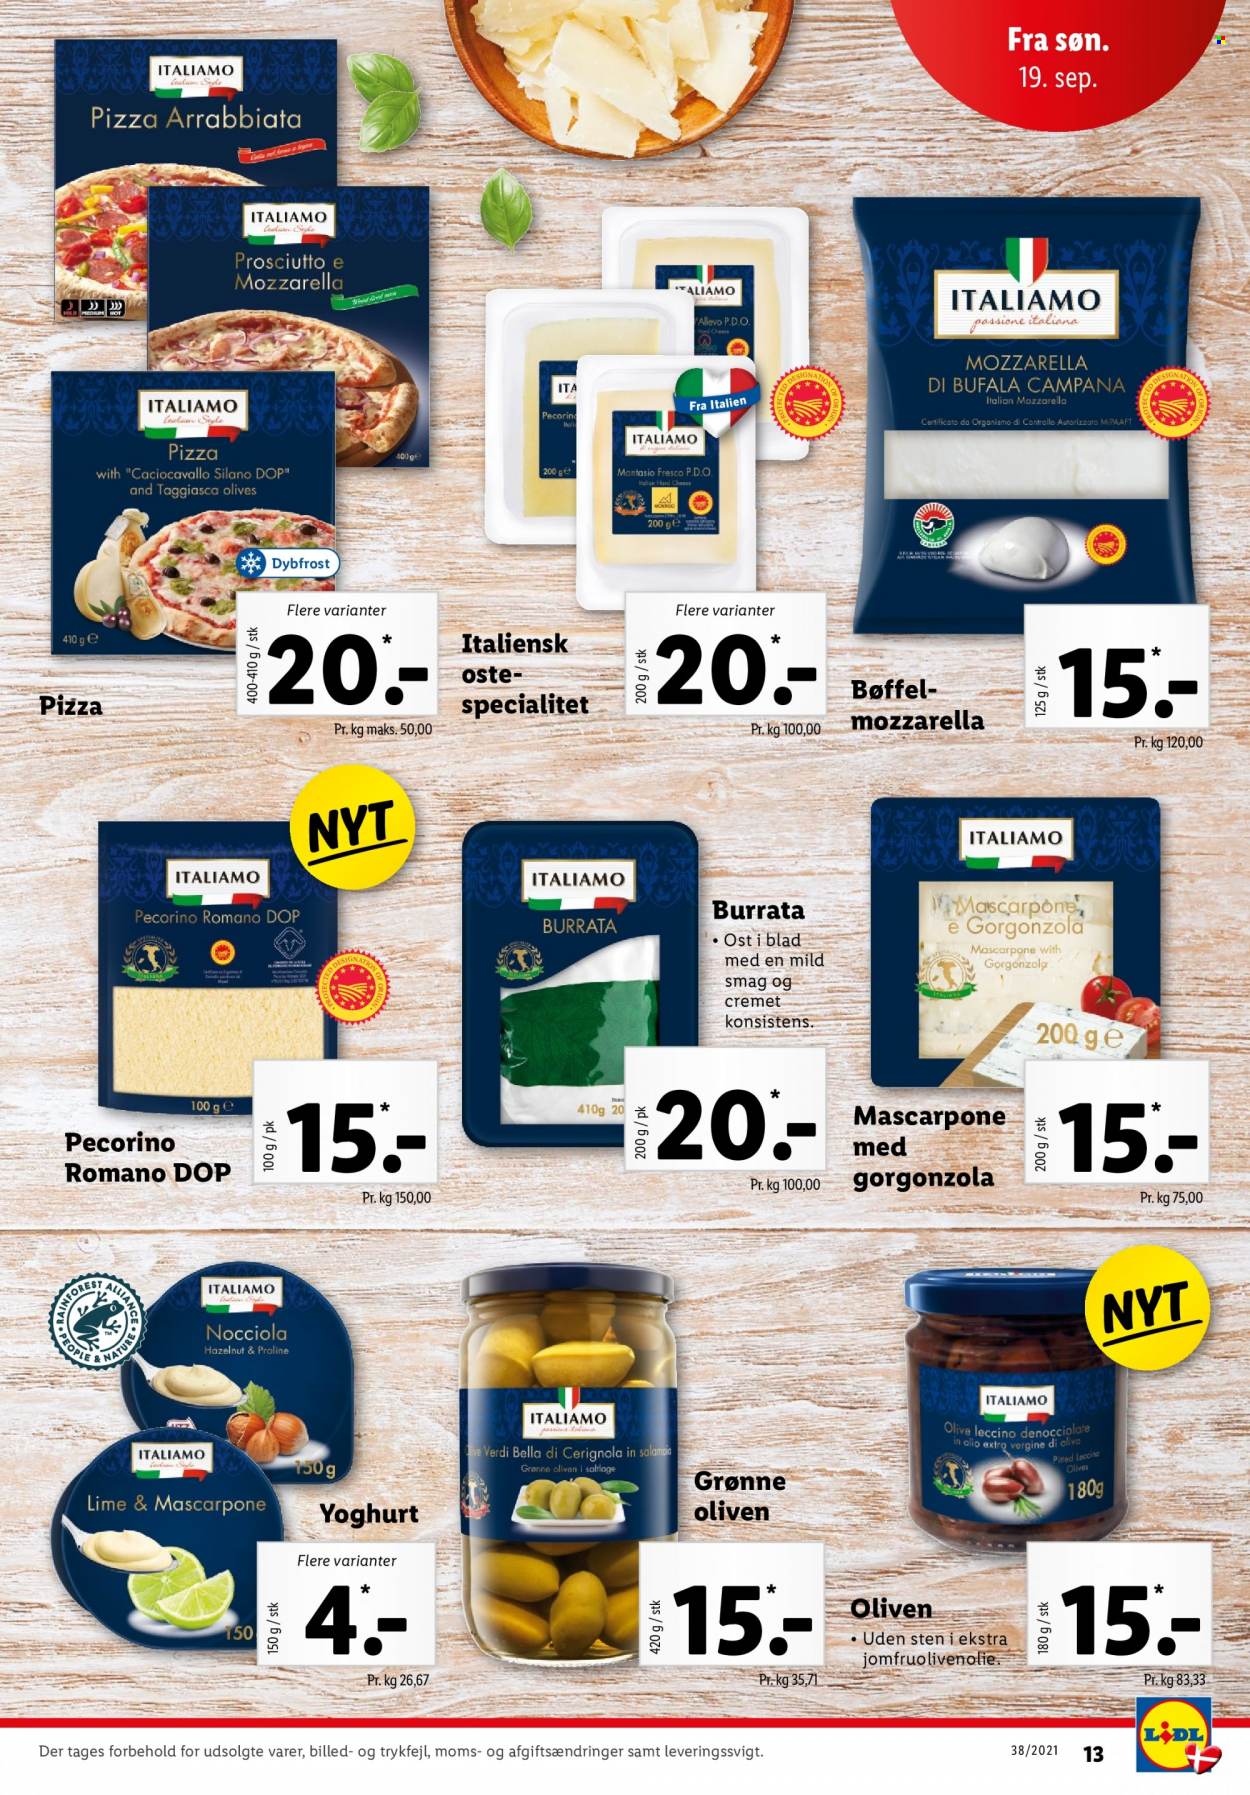 thumbnail - Lidl tilbud  - 19.9.2021 - 25.9.2021 - tilbudsprodukter - oliven, pizza, prosciutto, mascarpone, yoghurt, mel. Side 13.